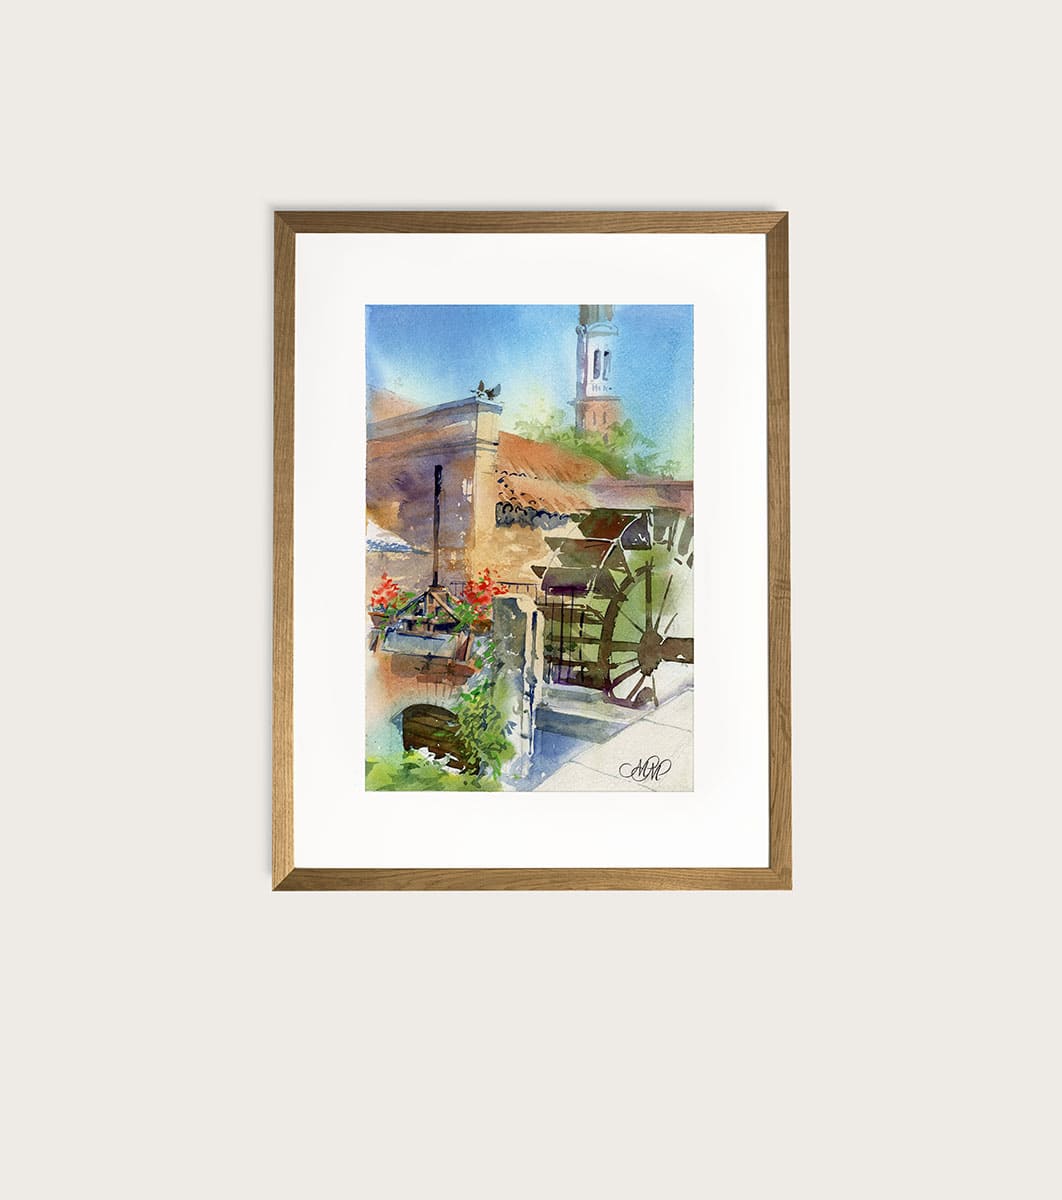 Old mill in Dolo. Framed Watercolor sketch